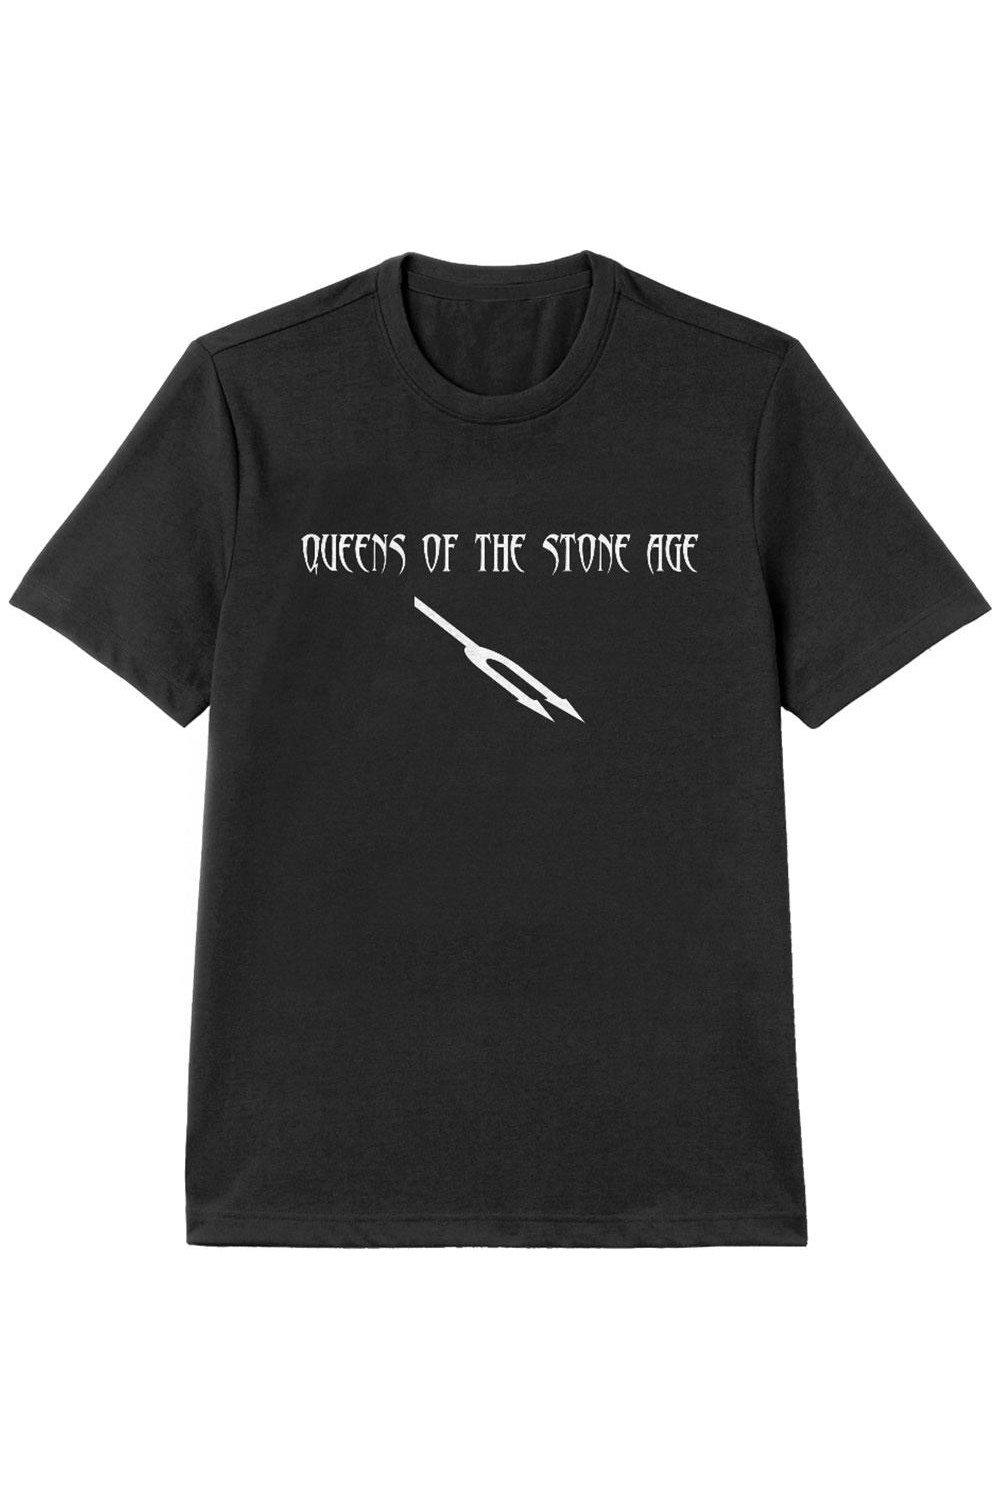 Хлопковая футболка Deaf Songs Queens Of The Stone Age, черный